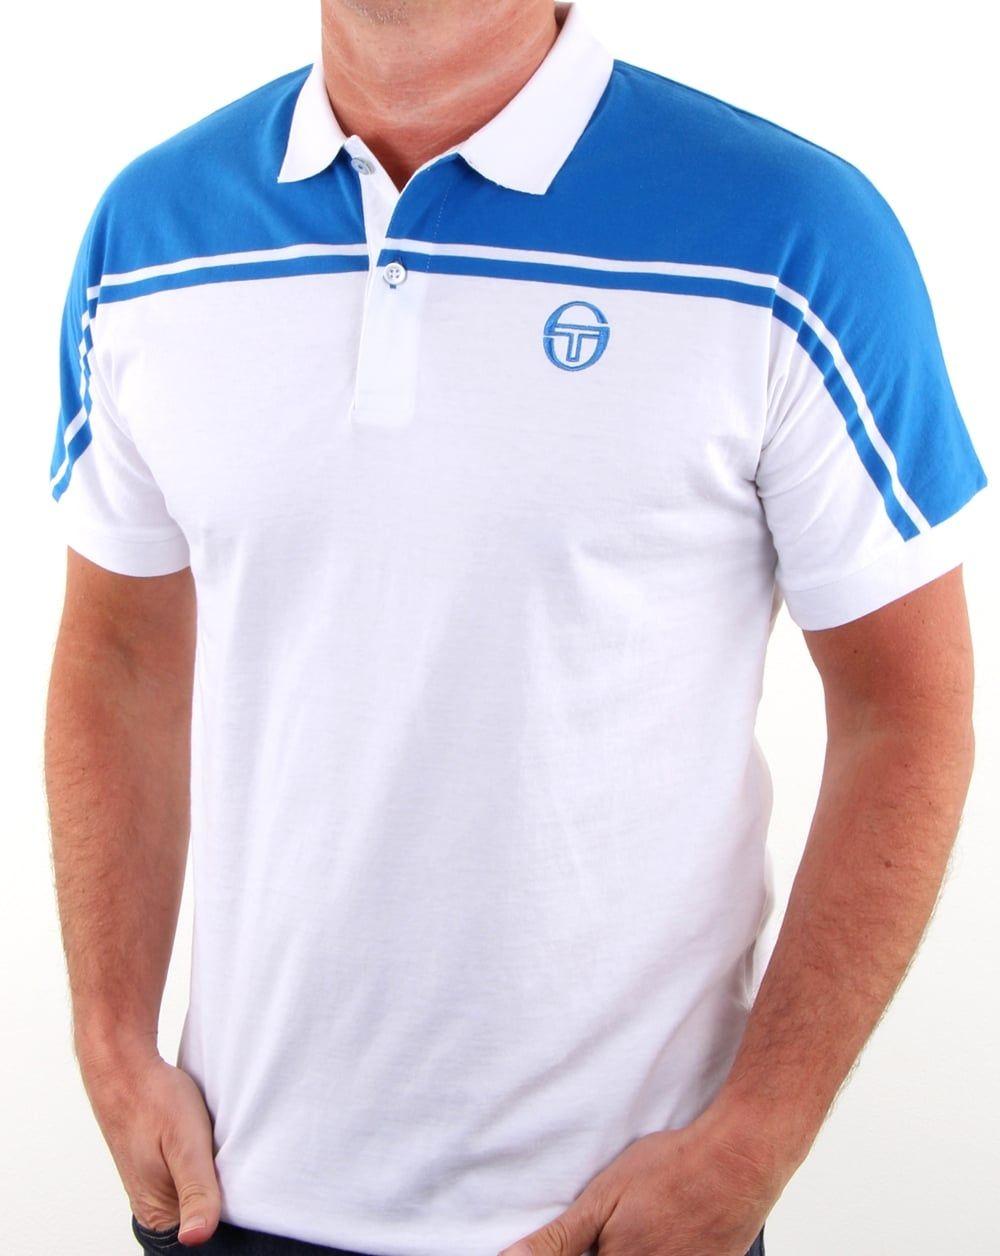 White and Blue Polo Logo - Sergio Tacchini New Young Line Polo Shirt White/royal, Men's